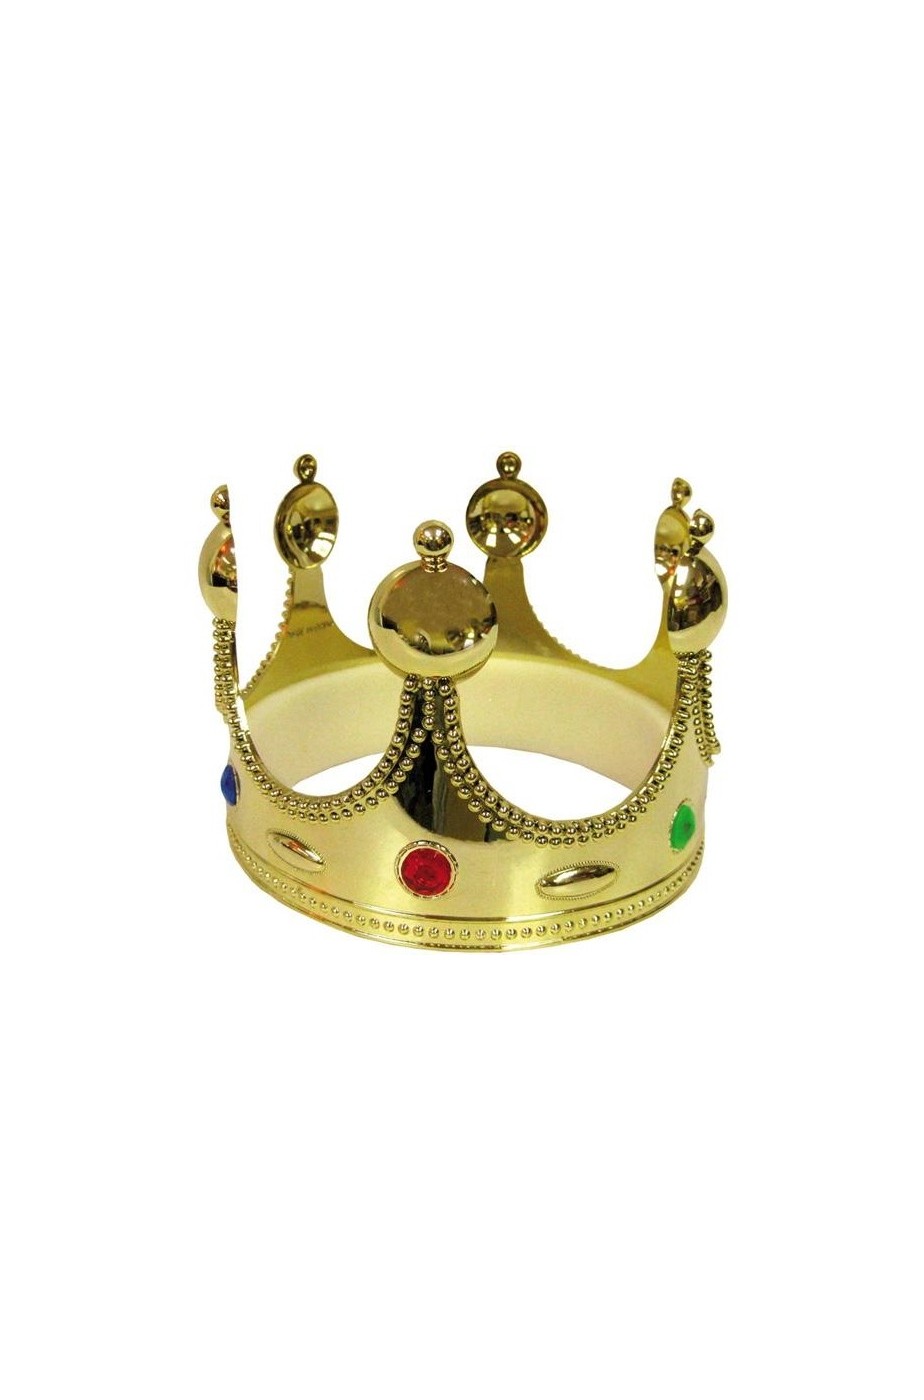 Corona da re per bambino